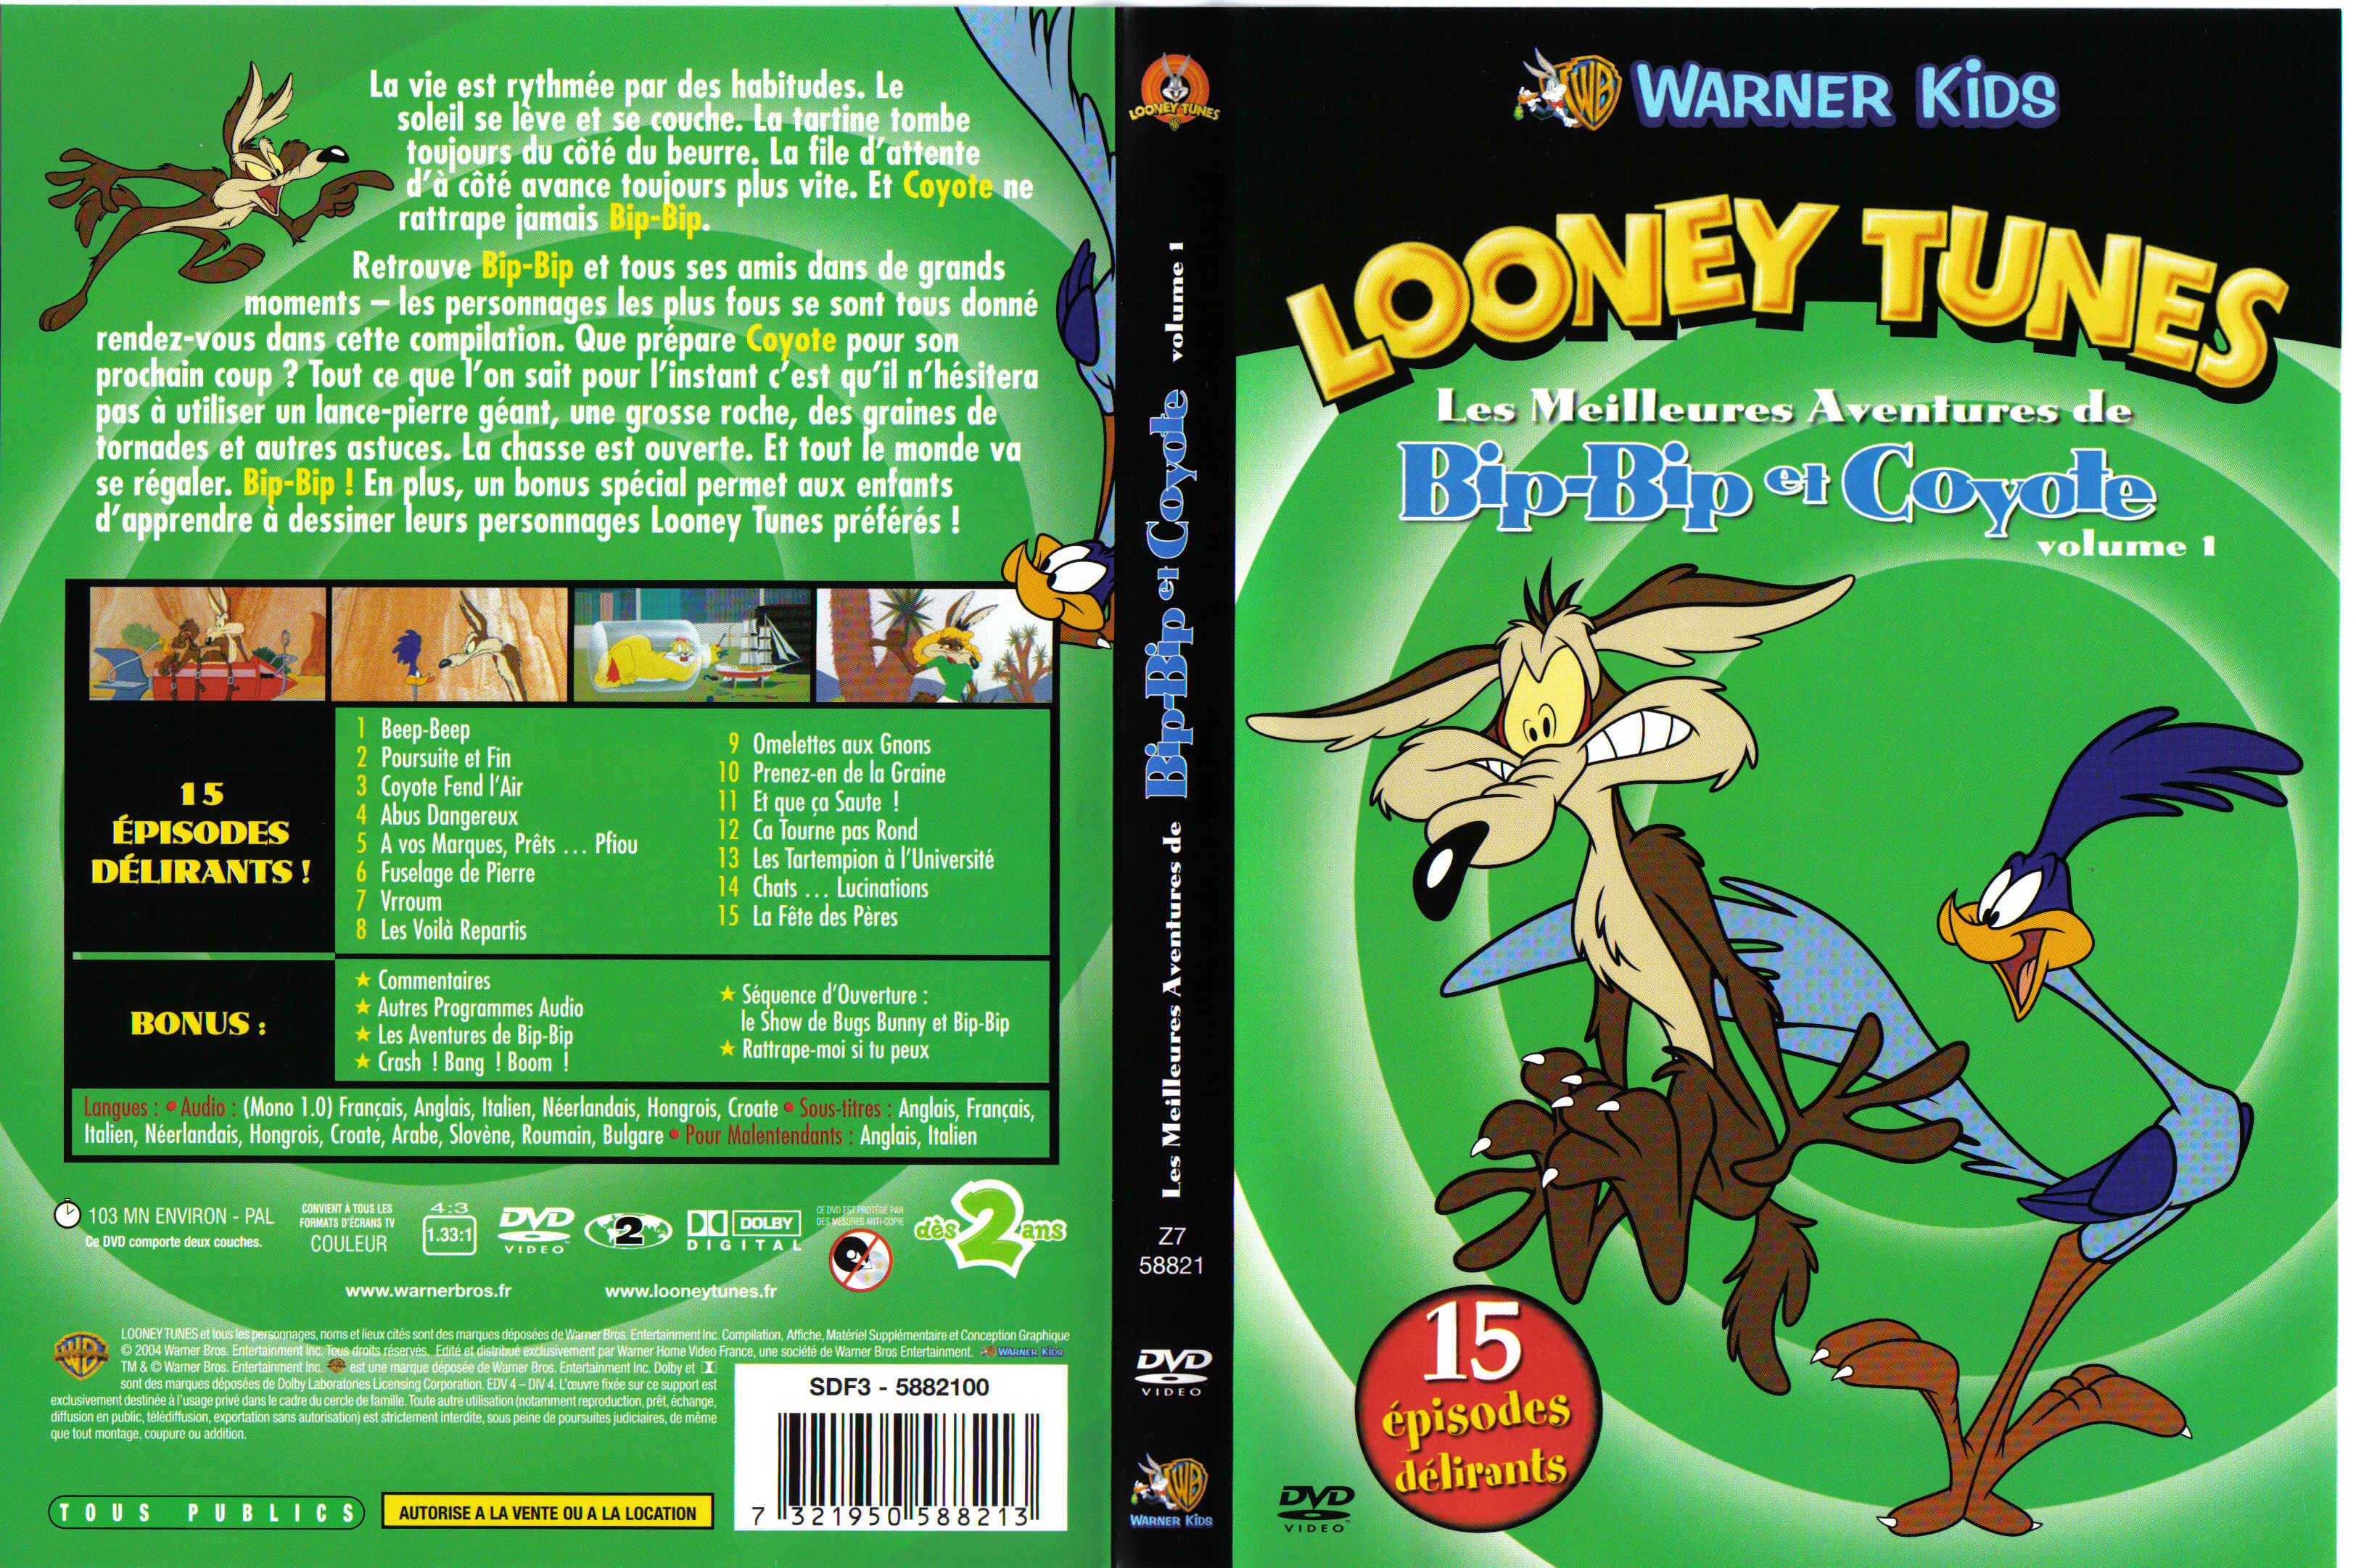 Jaquette DVD Looney Tunes - Les meilleures aventures de Bip-Bip et Coyote - volume 1